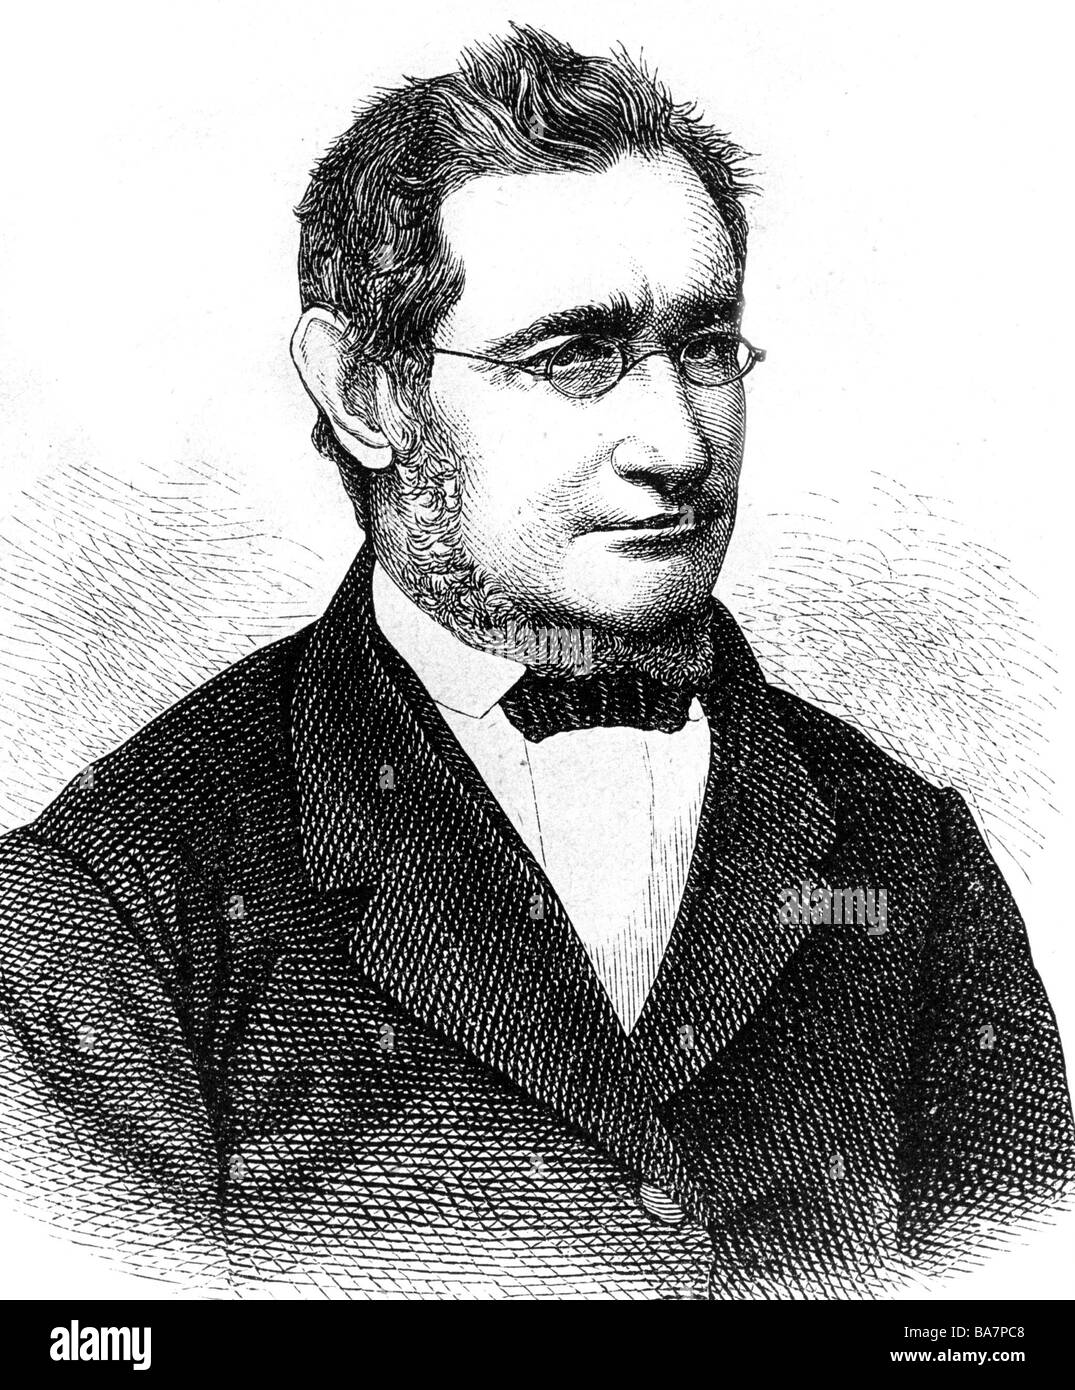 Mayer, Julius Robert von, 25.11 1814 - 20.3.1878, German medic / physician and scientist (physicist), portrait, wood engraving, 19th century, , Stock Photo